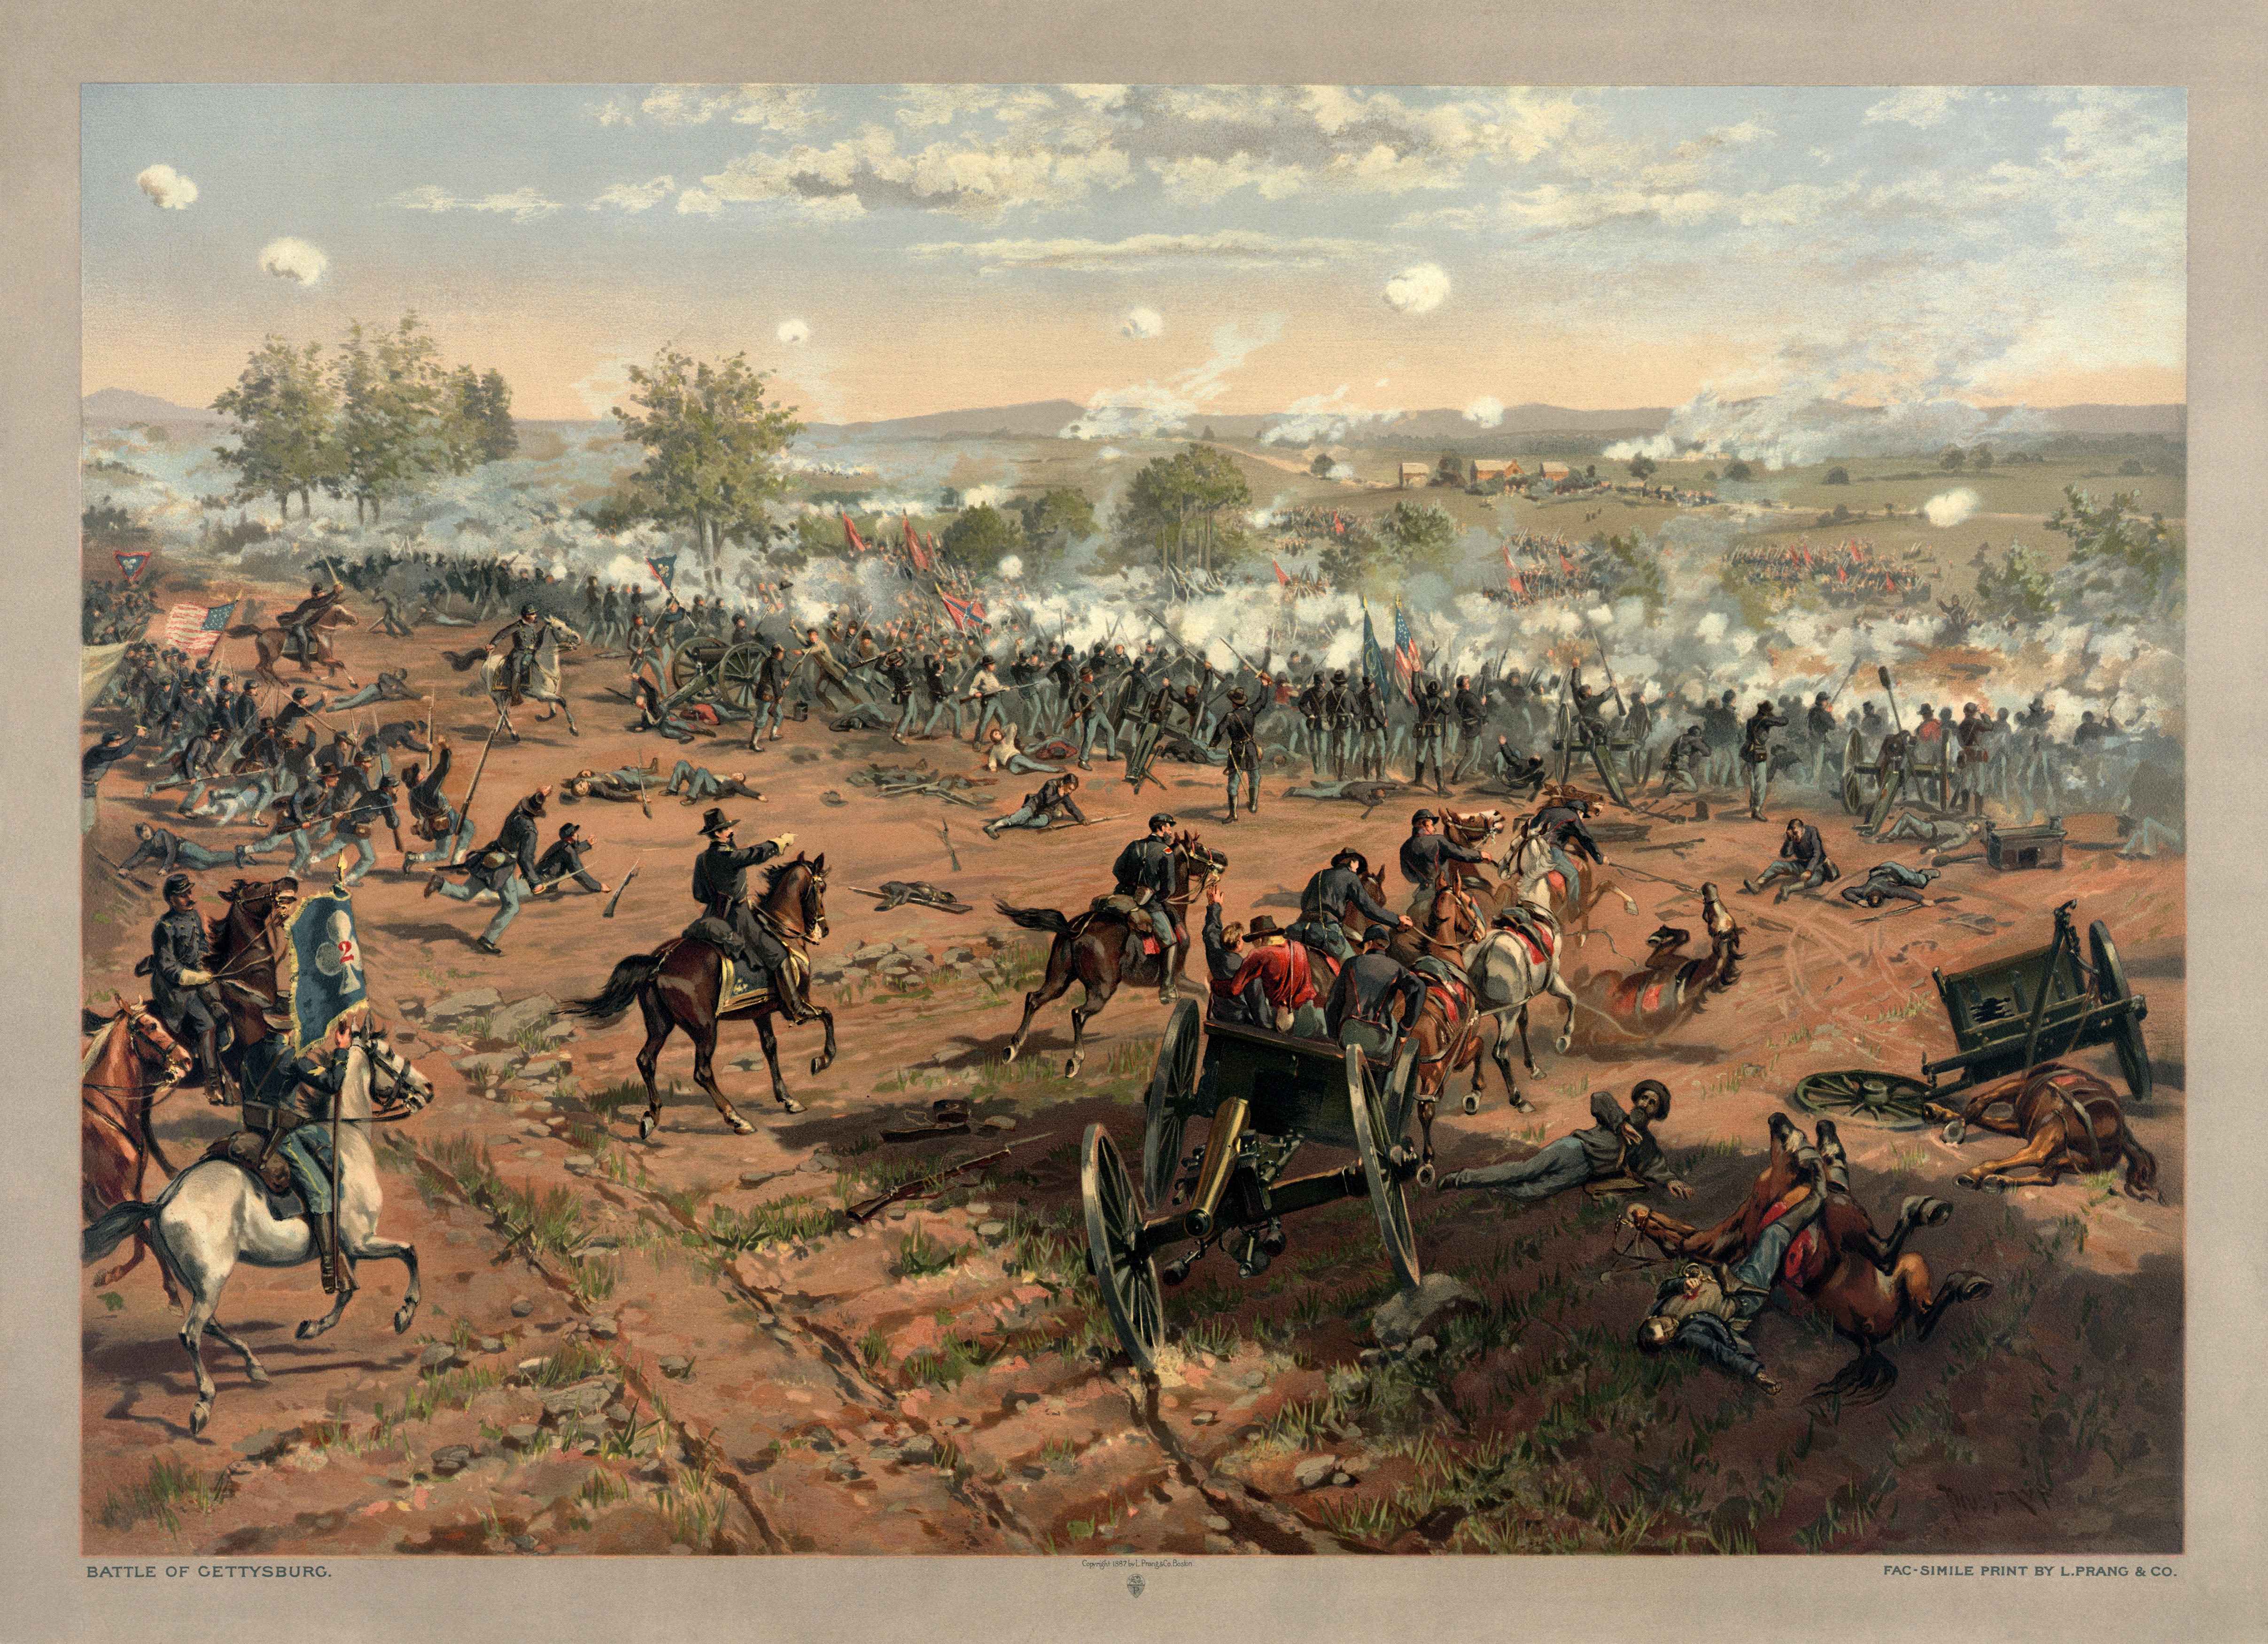 File:Thure de Thulstrup - L. Prang and Co. - Battle of Gettysburg ...